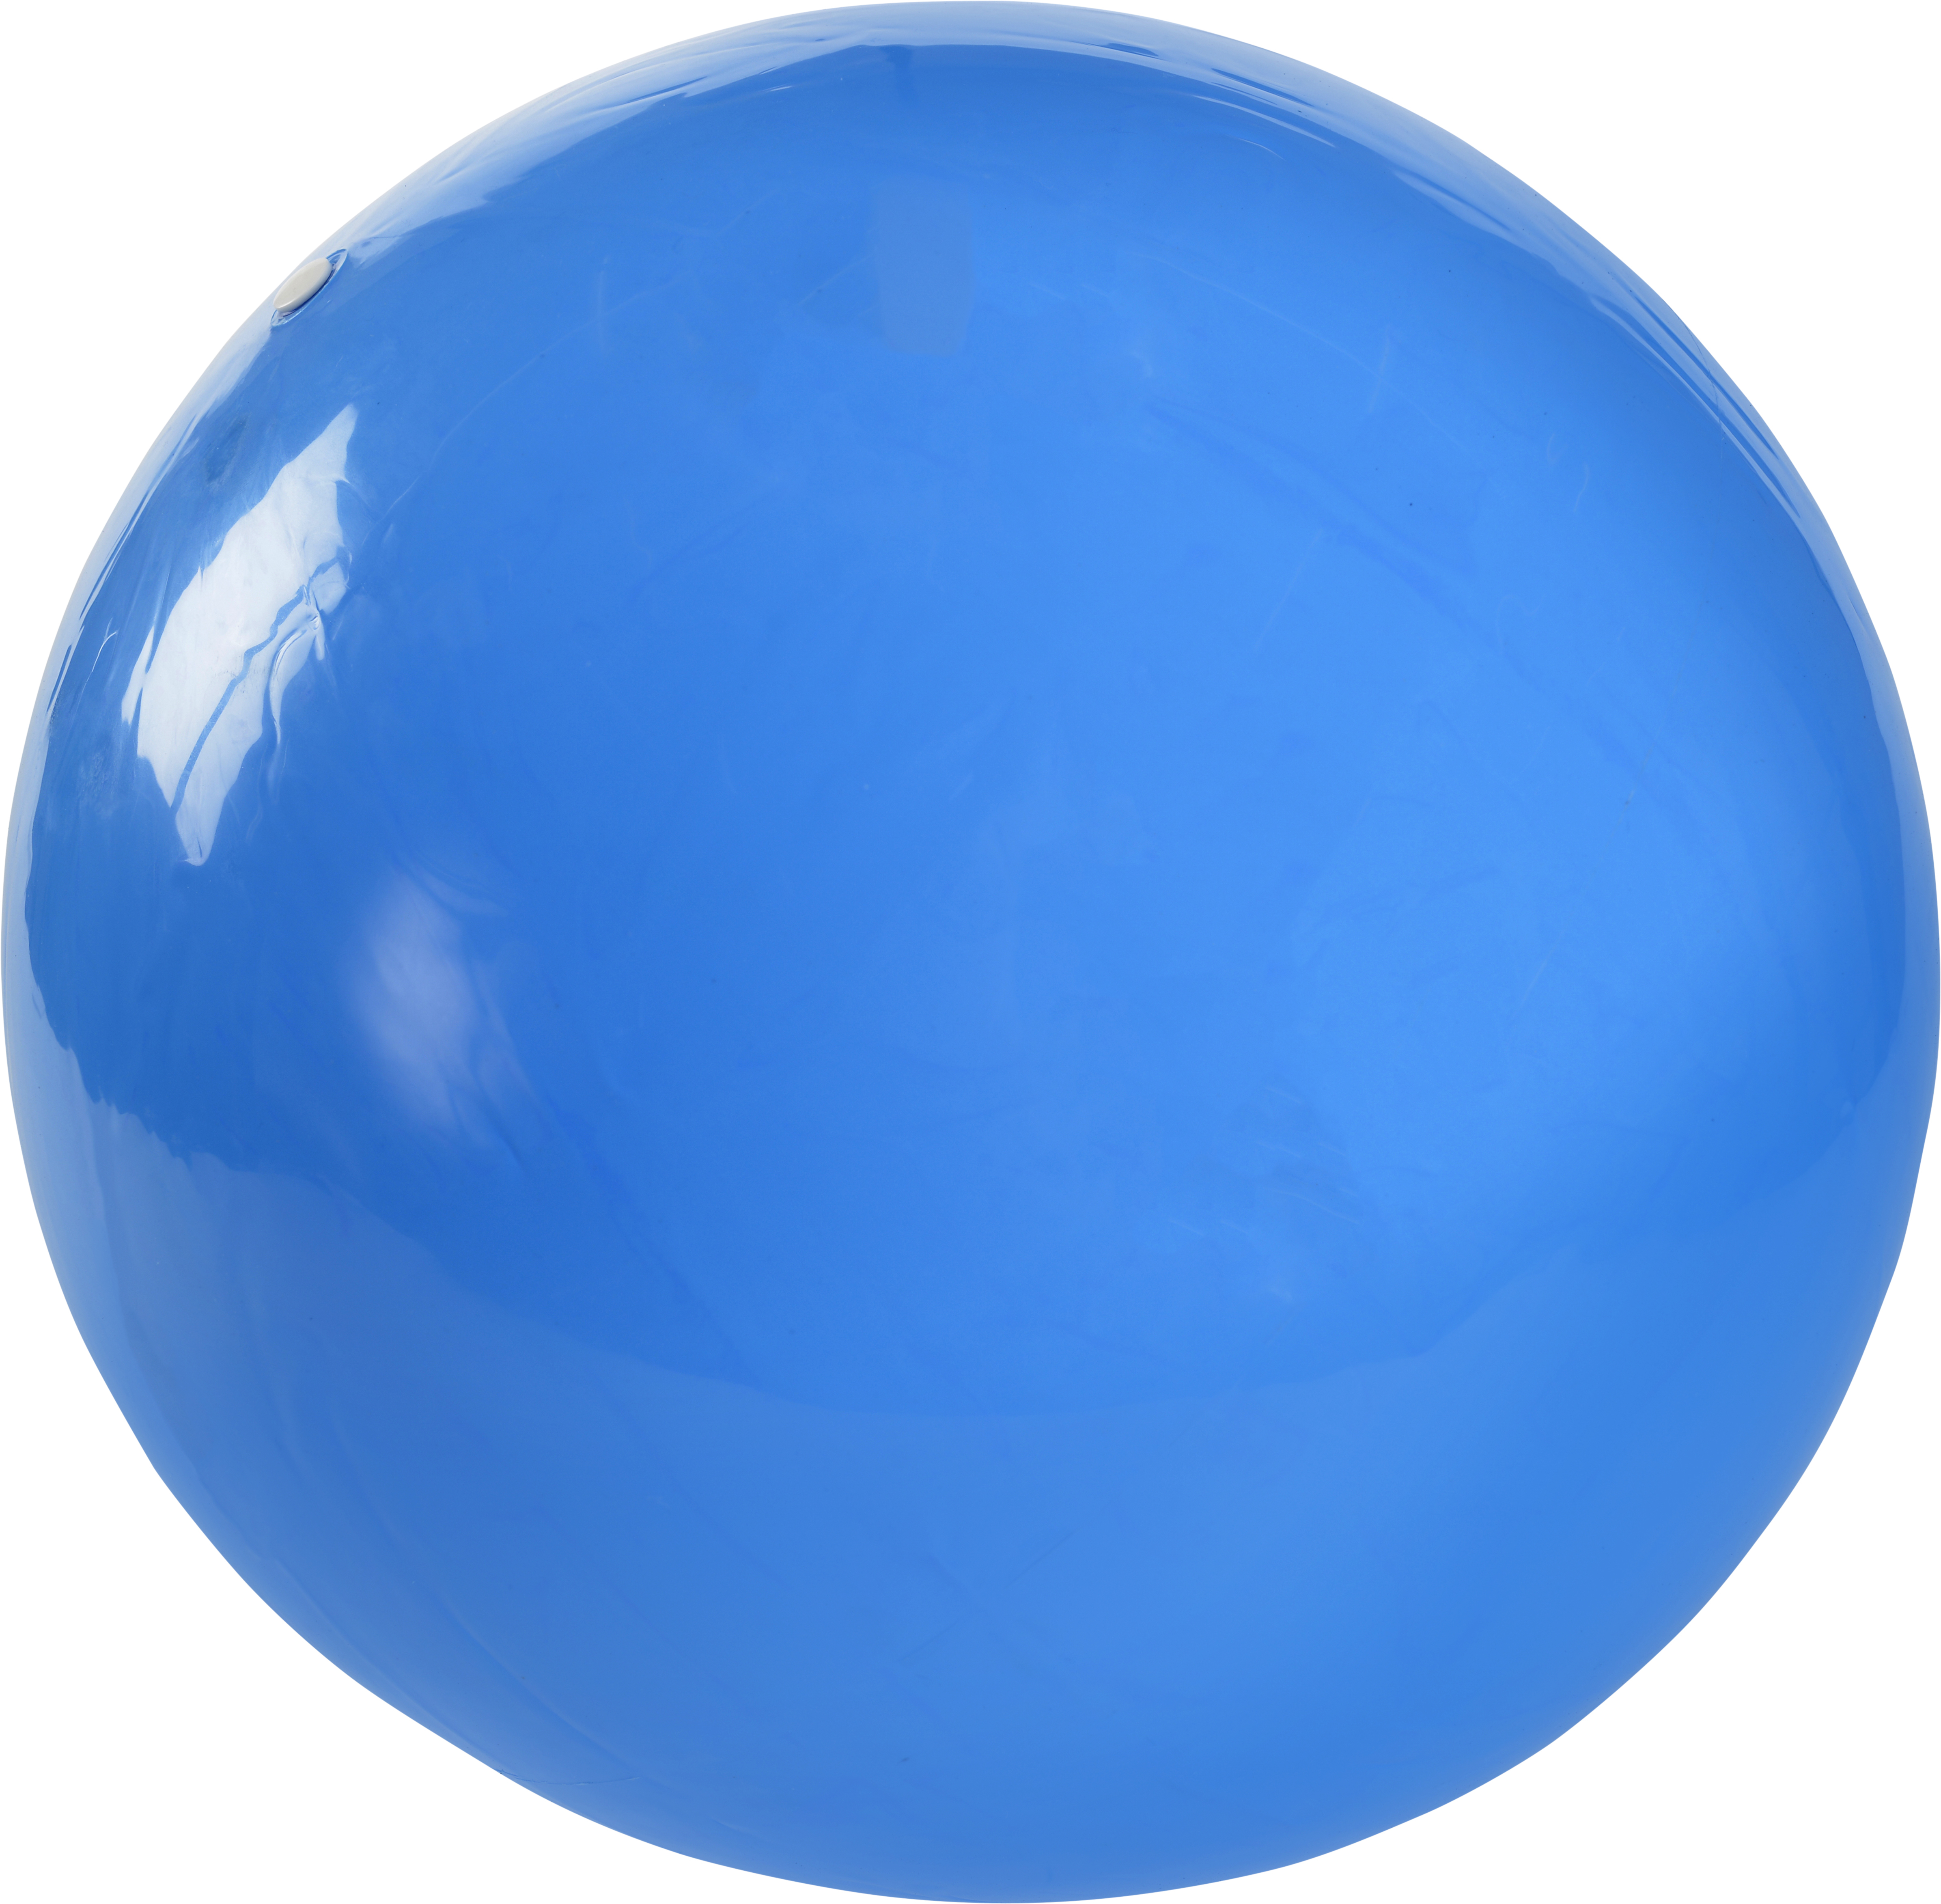 AniOne Treibball Blau Ø 35cm